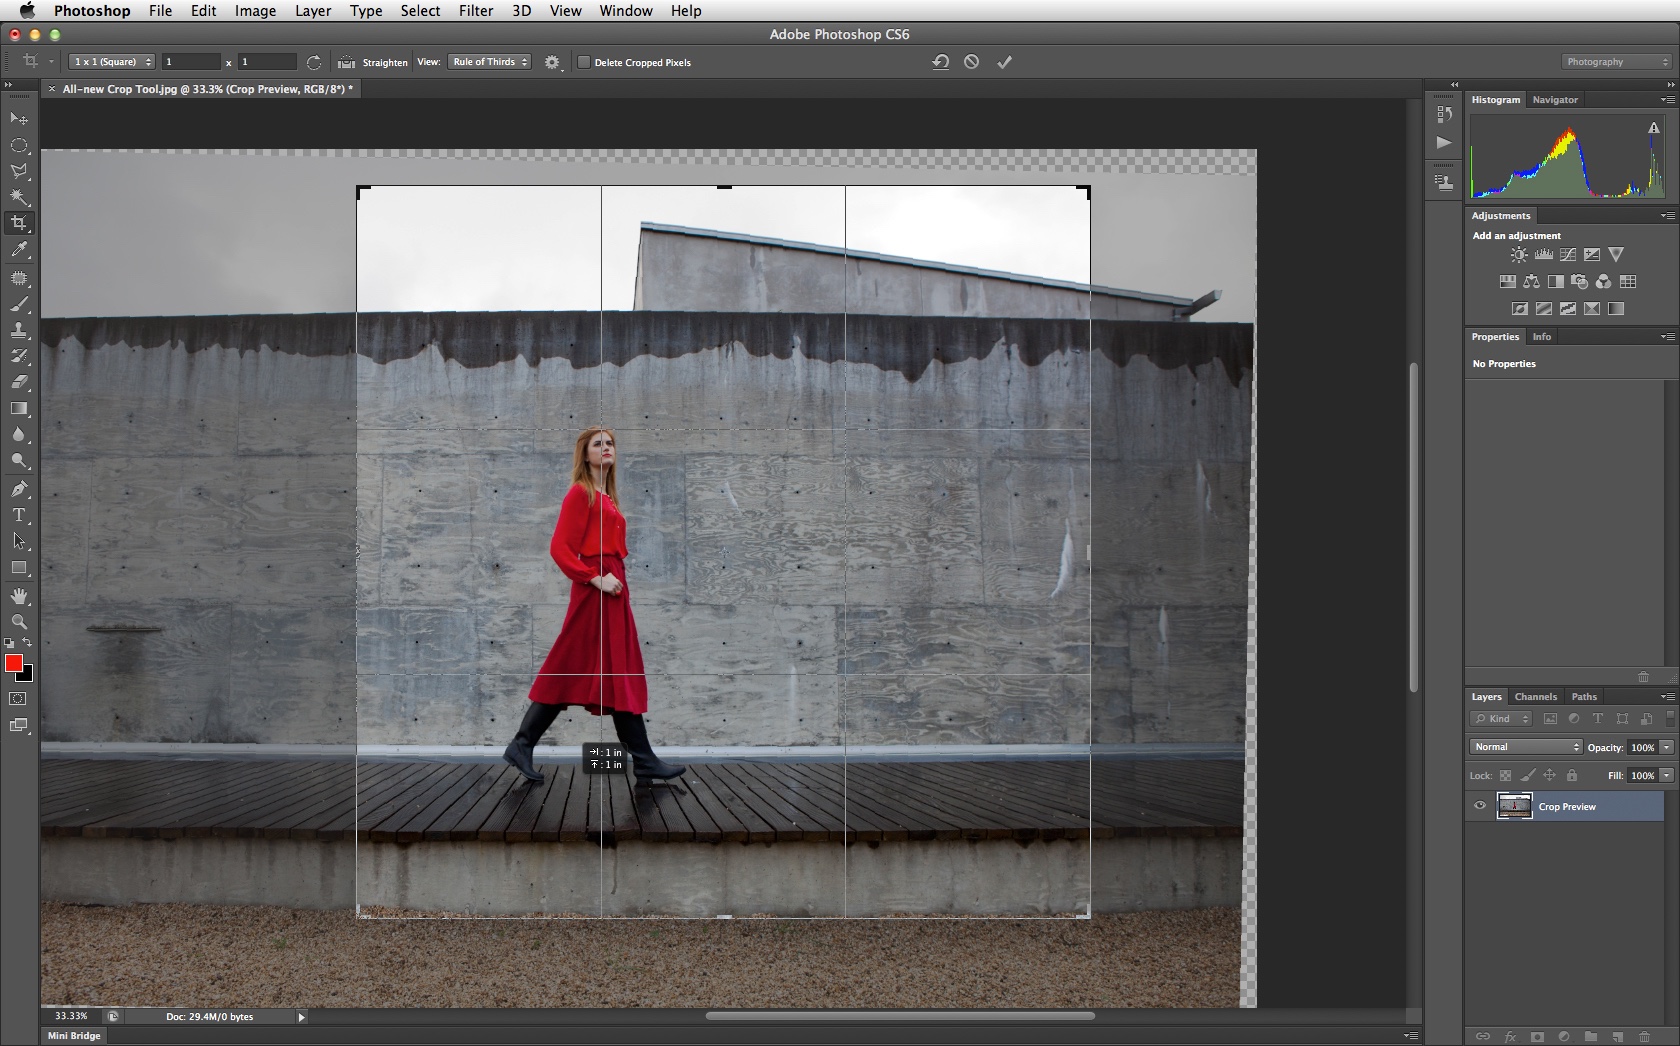 Adobe Photoshop CS6 for Mac Improved Crop Tool (2012)